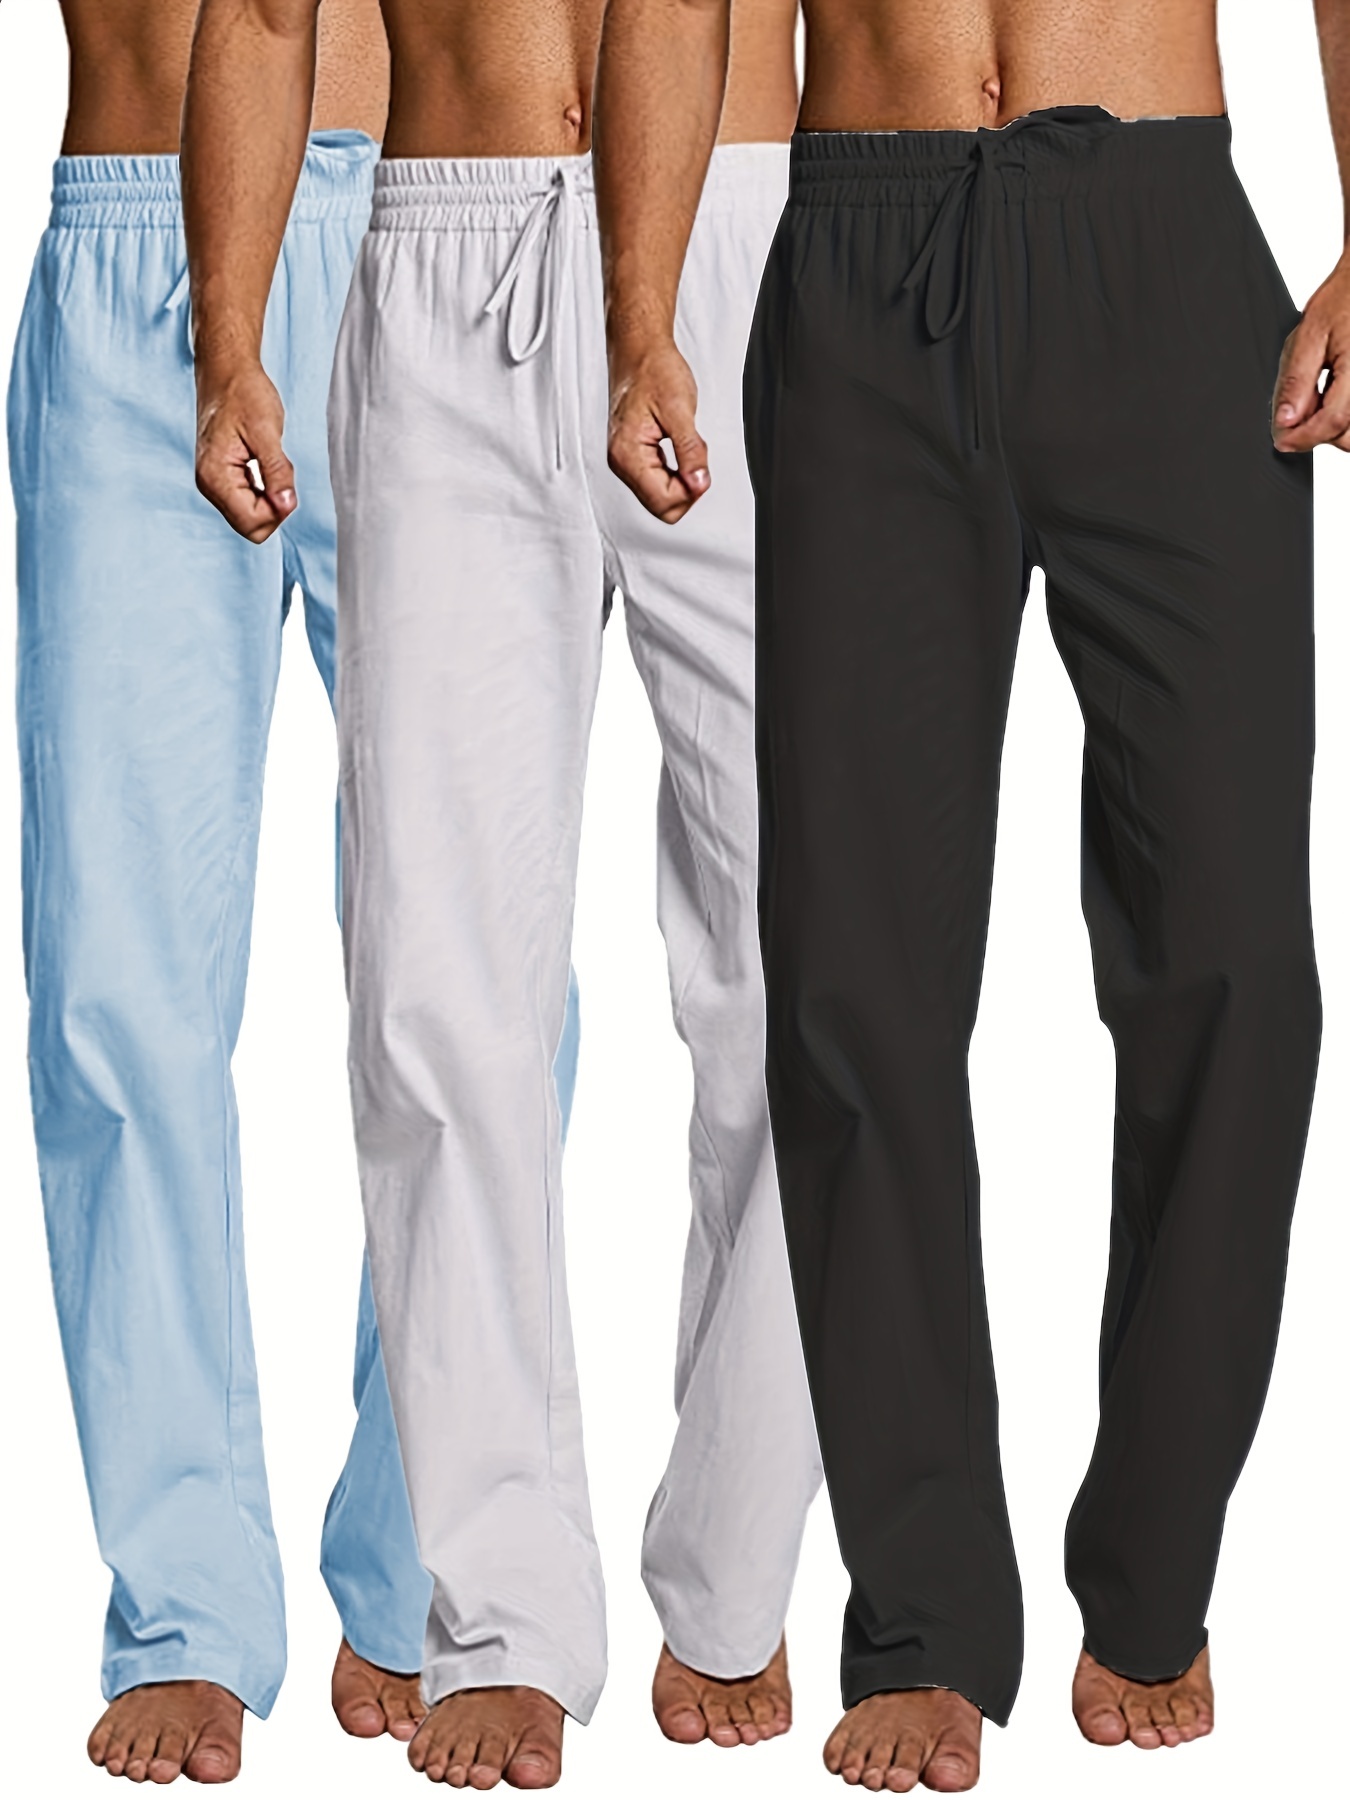 Women Cotton Linen Trousers Casual Pants Summer Yoga Home Street Beach Pants  - China Wmen's Pants and Wmen's Trousers price